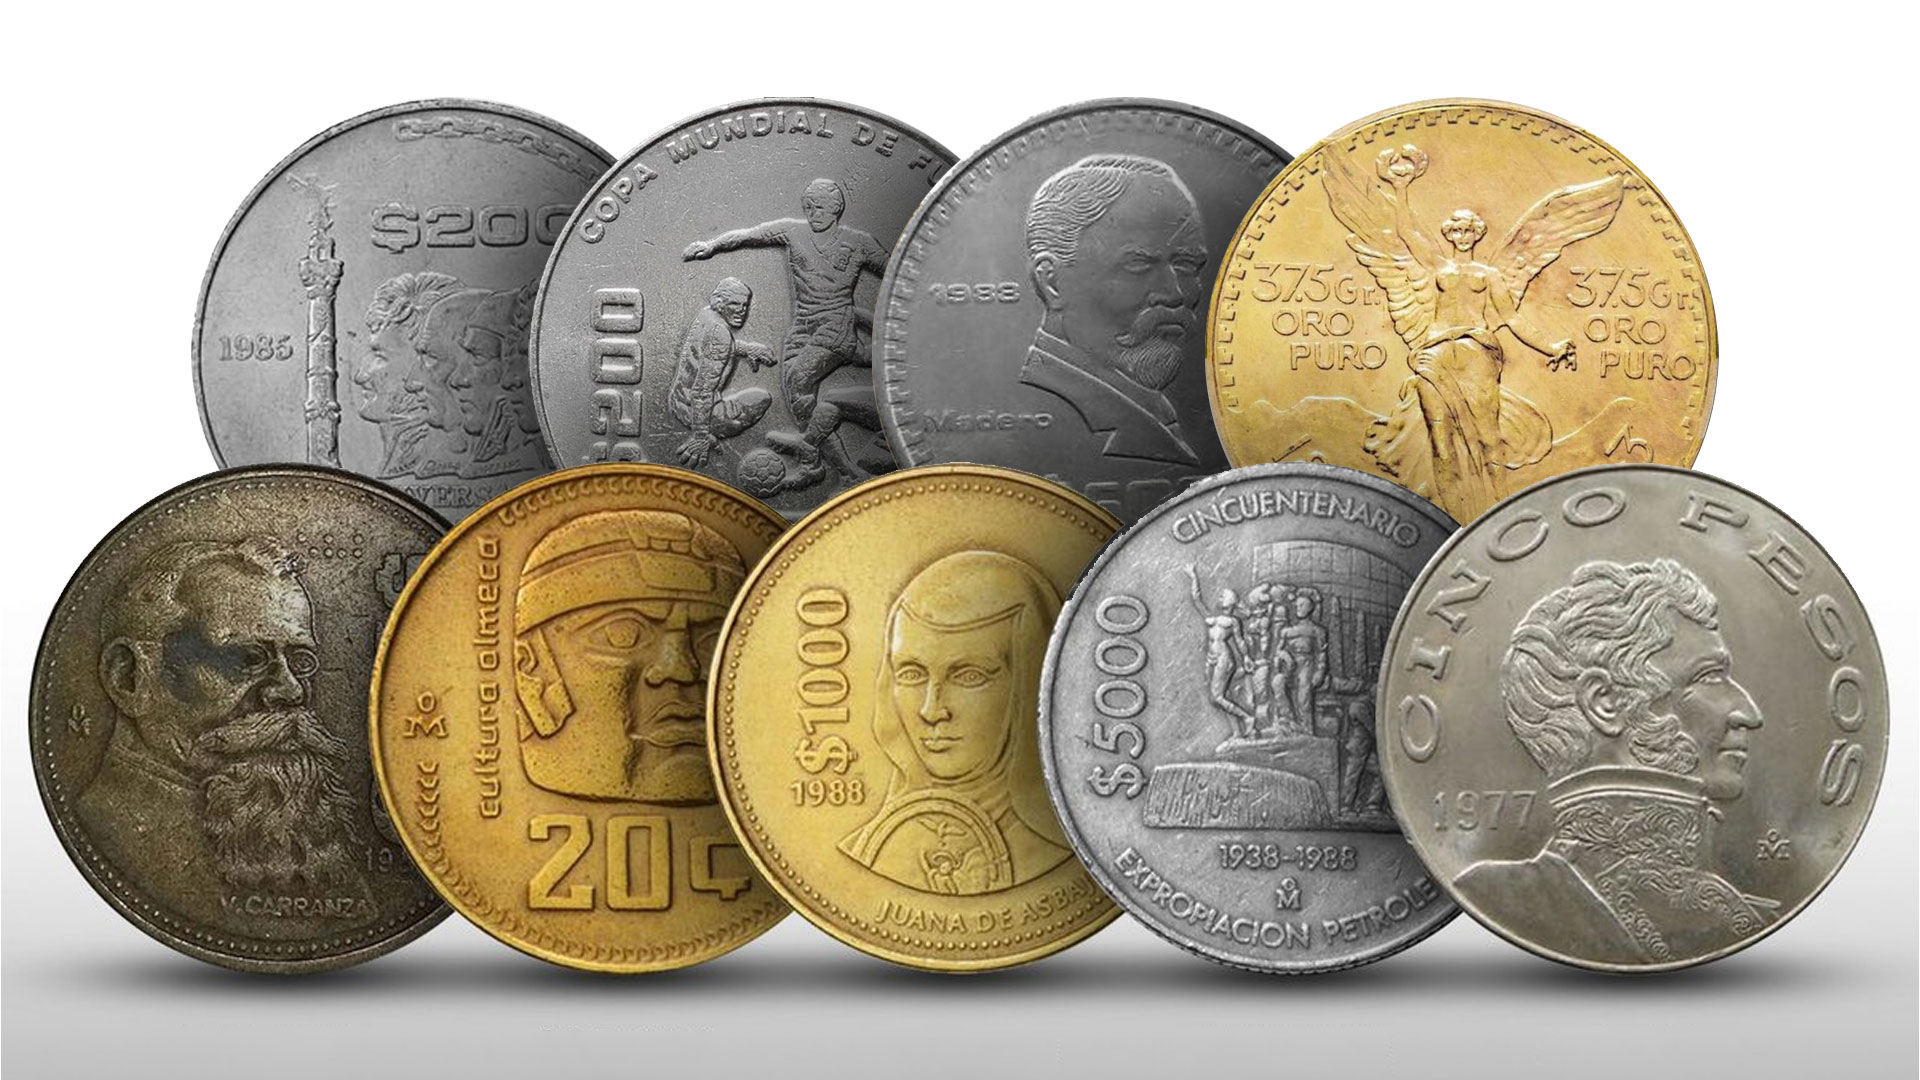 Gran variedad de monedas se venden a precios exorbitantes. Infobae